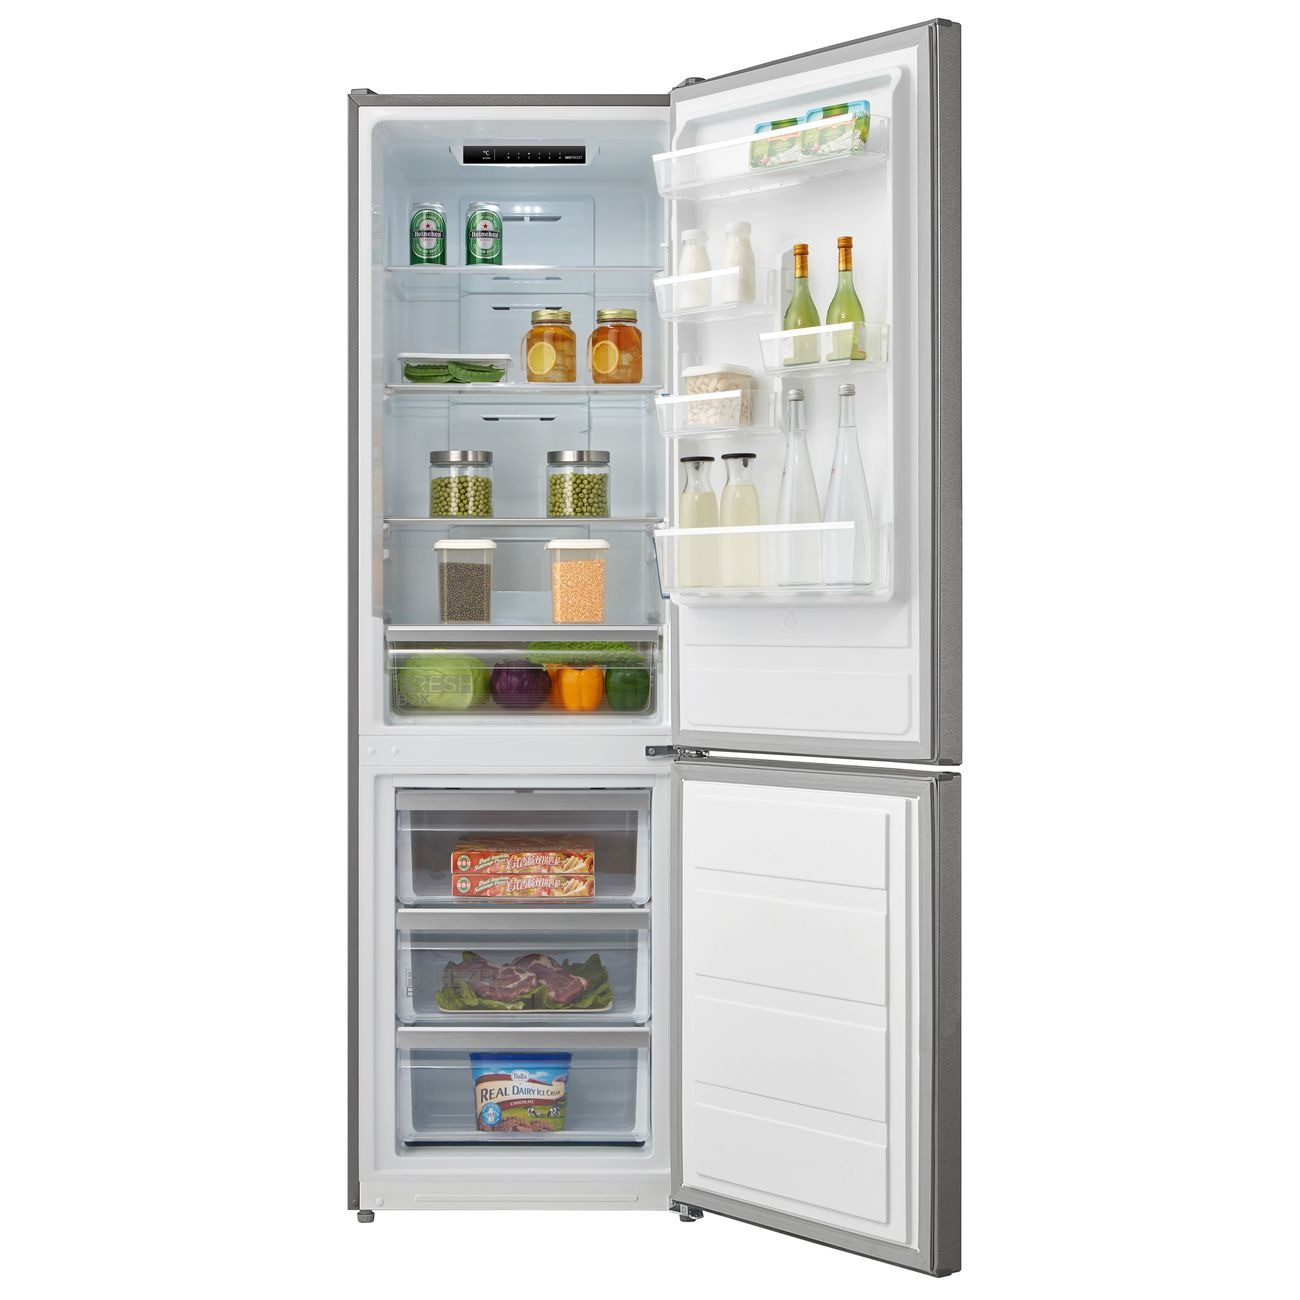 Холодильник Midea MDRB424FGF02I